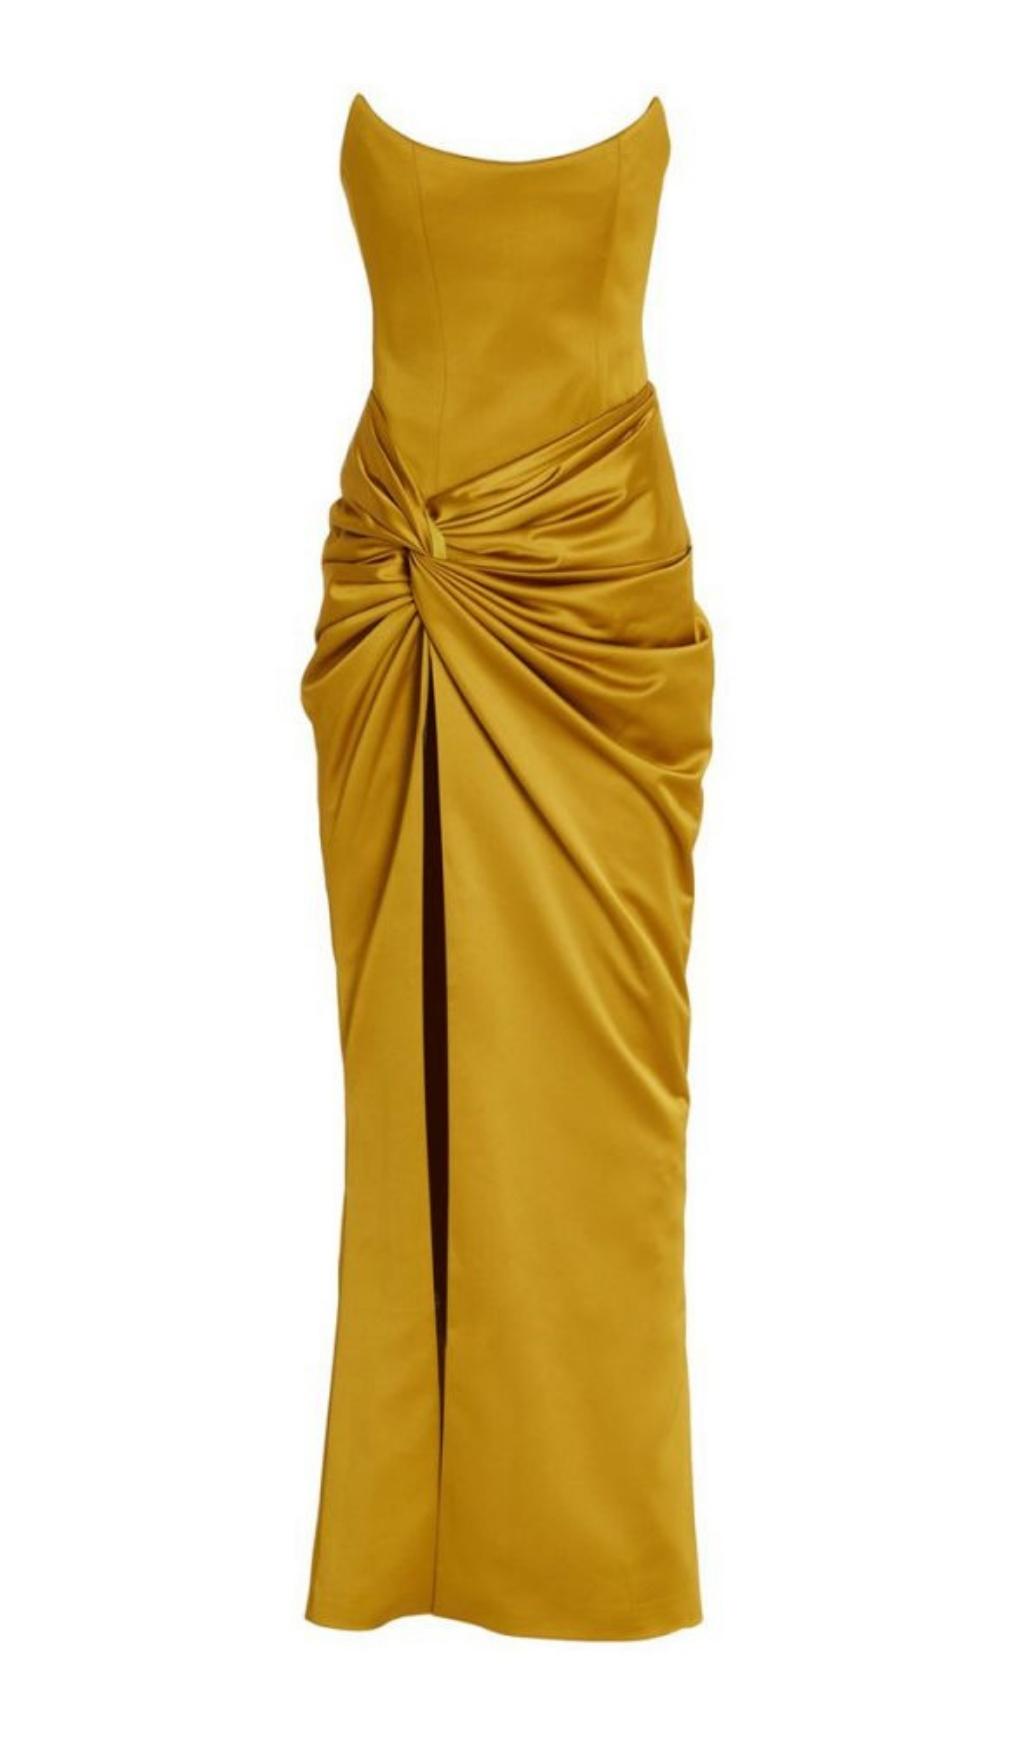 Strapless Asymmetrical Corset Dress in Yellow